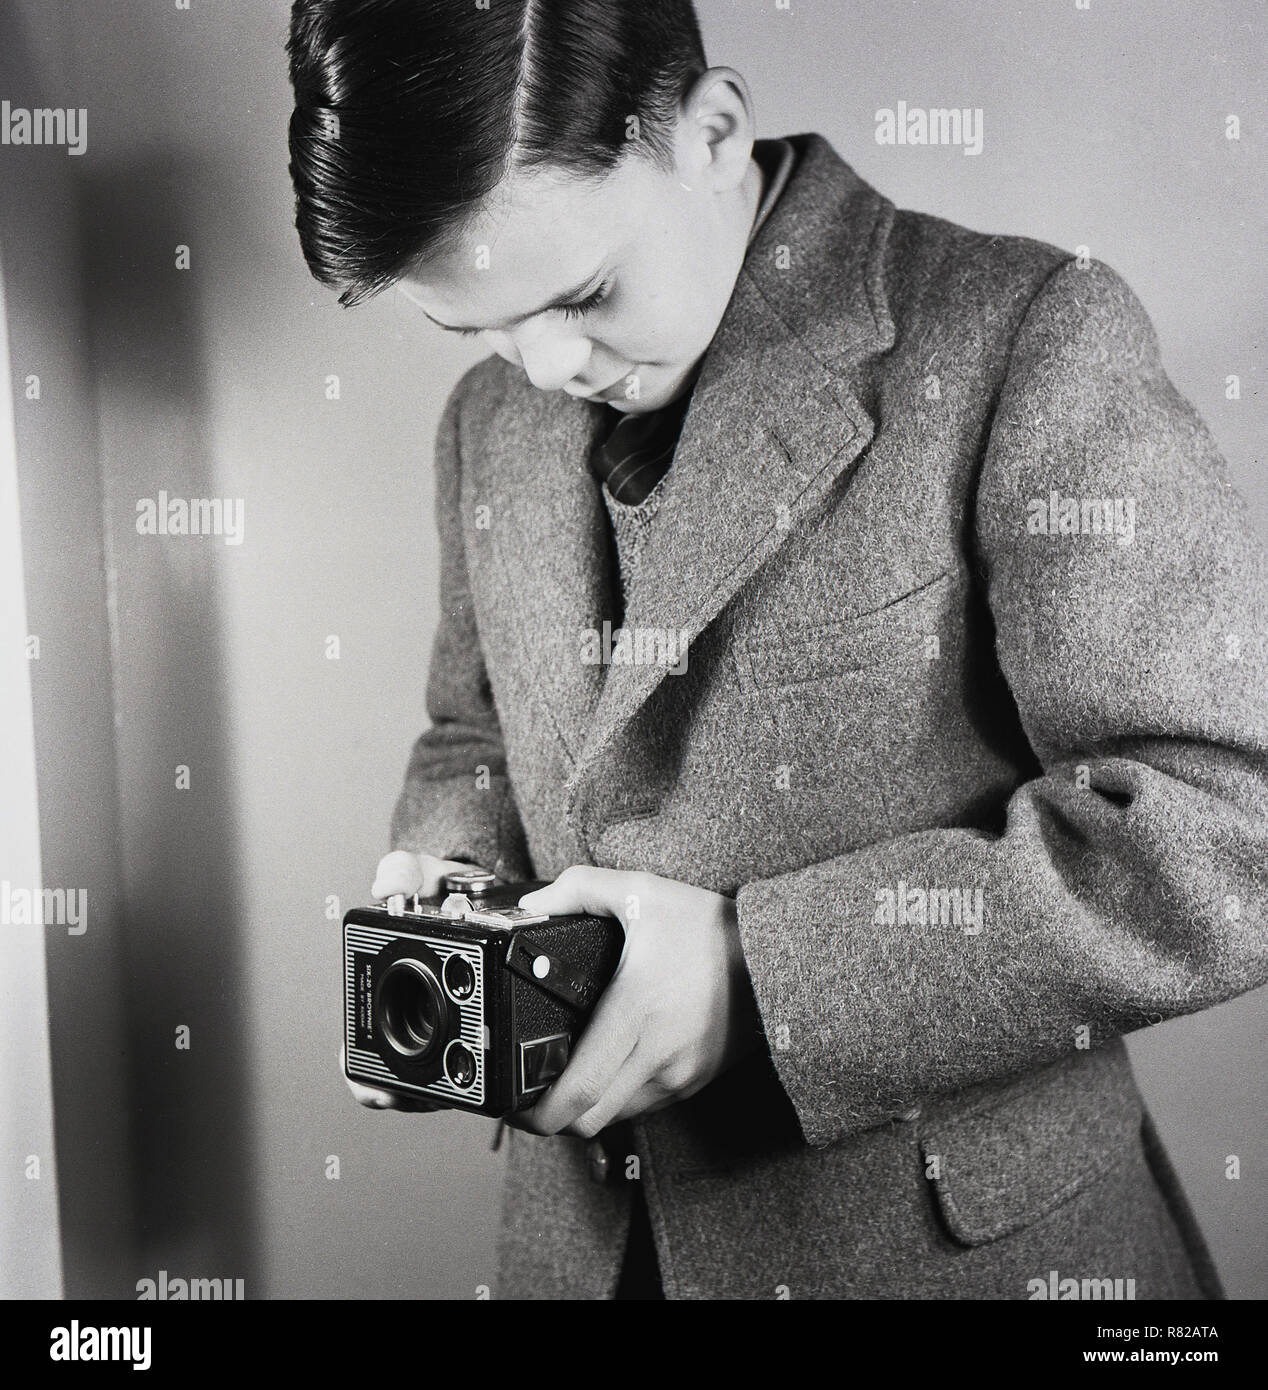 Kodak tri x film box hi-res stock photography and images - Alamy